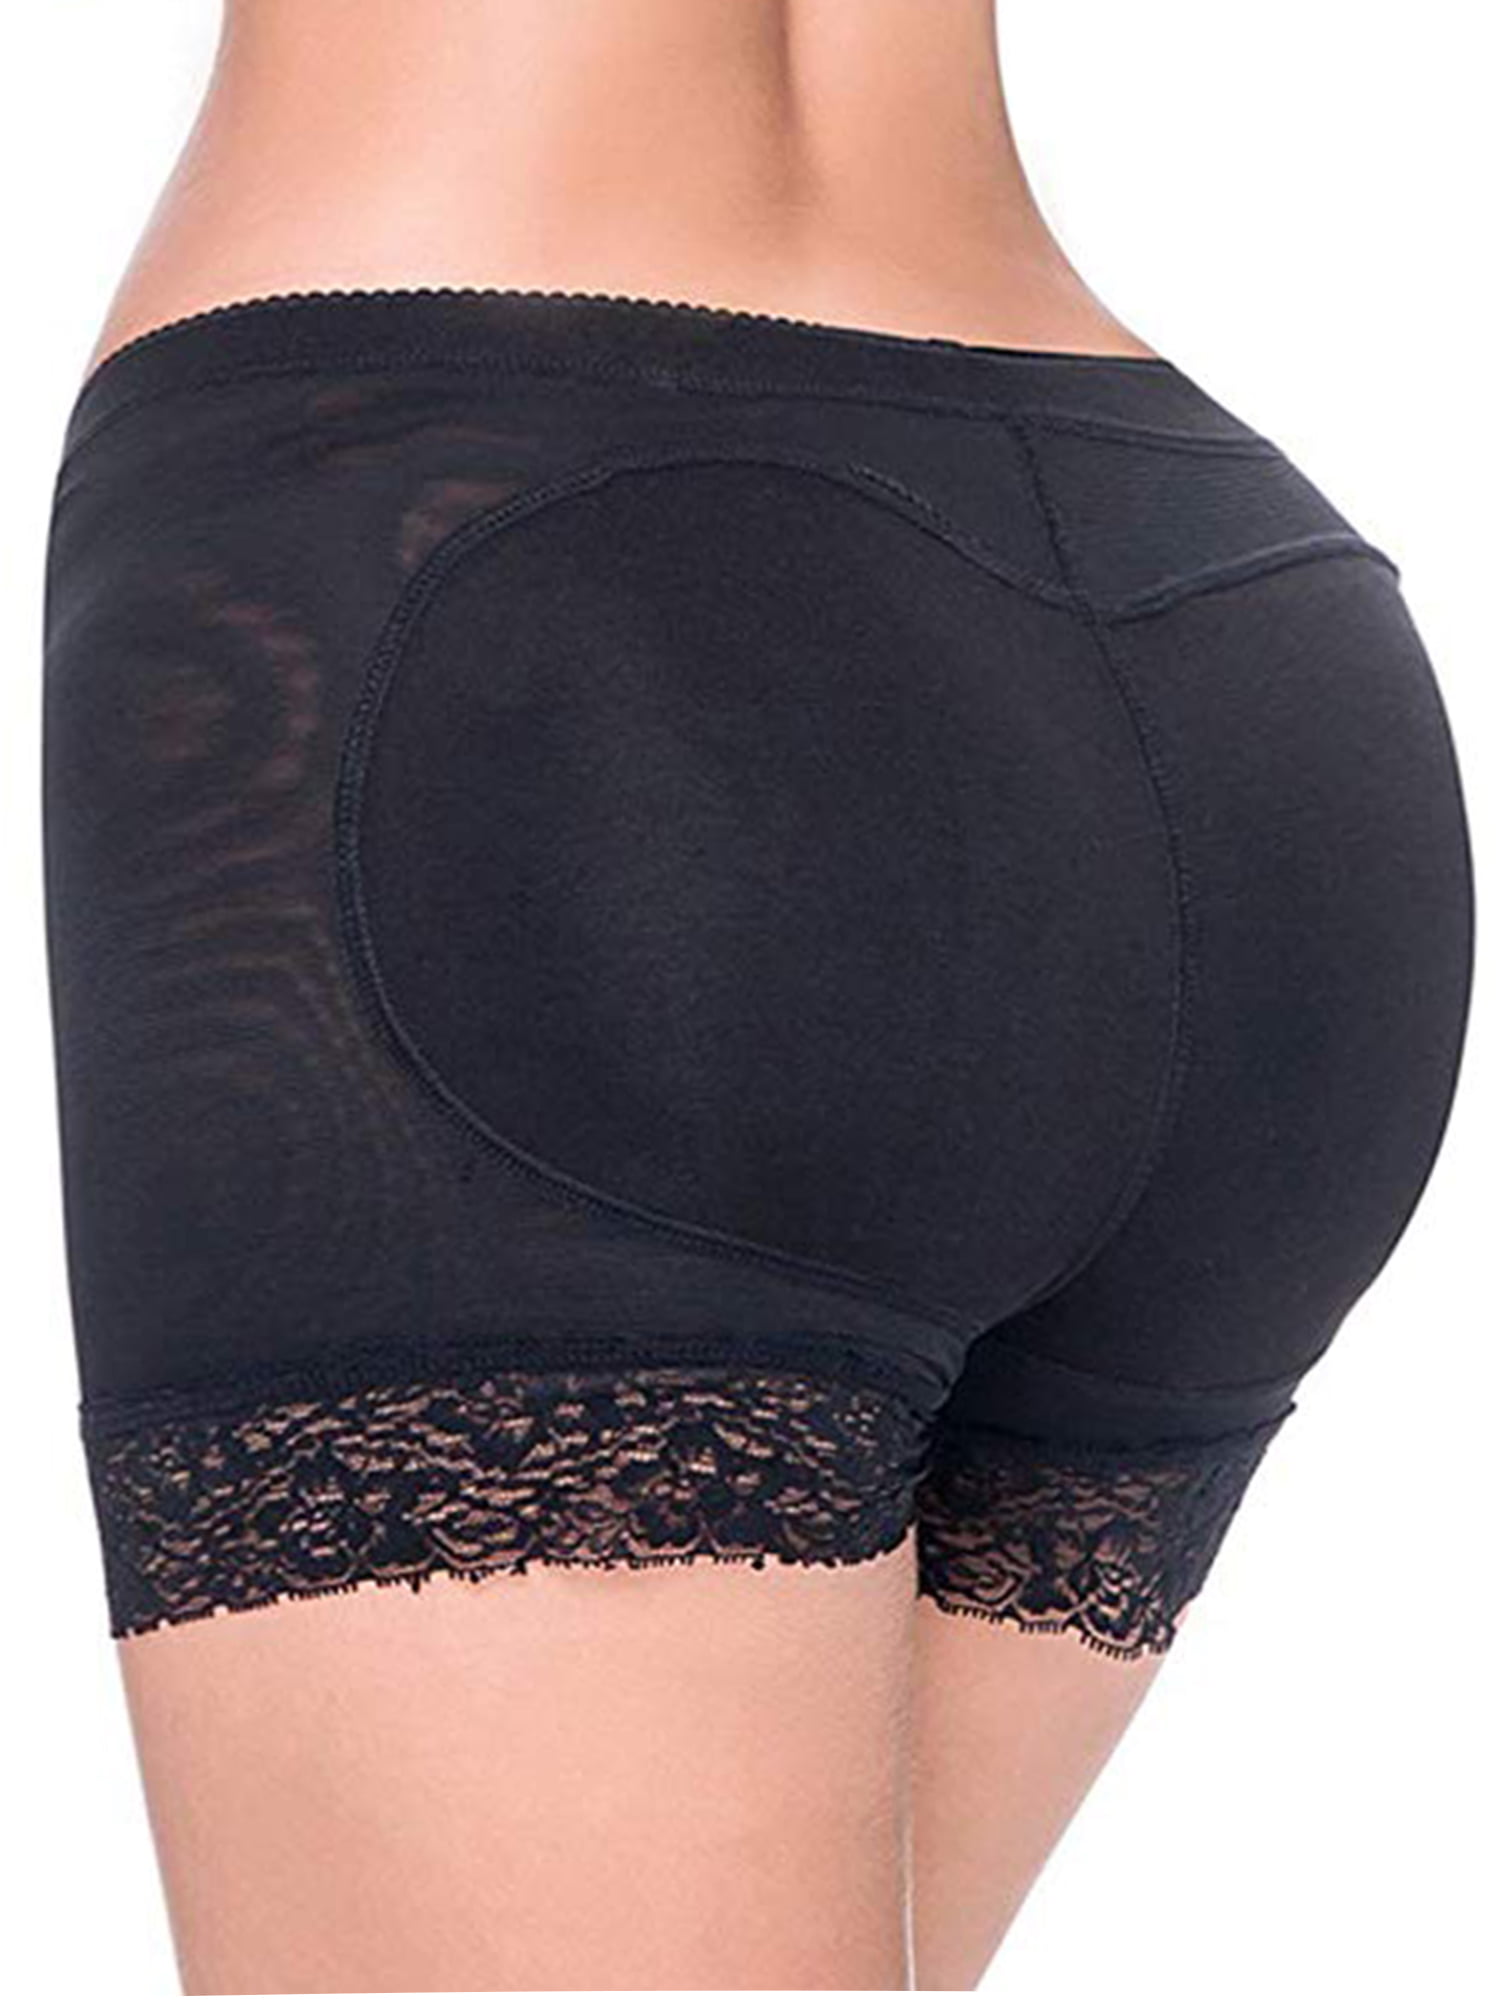 Sayfut Womens Seamless Butt Lifter Panties Padded Removable Butt Pad Lace Panties Enhancer